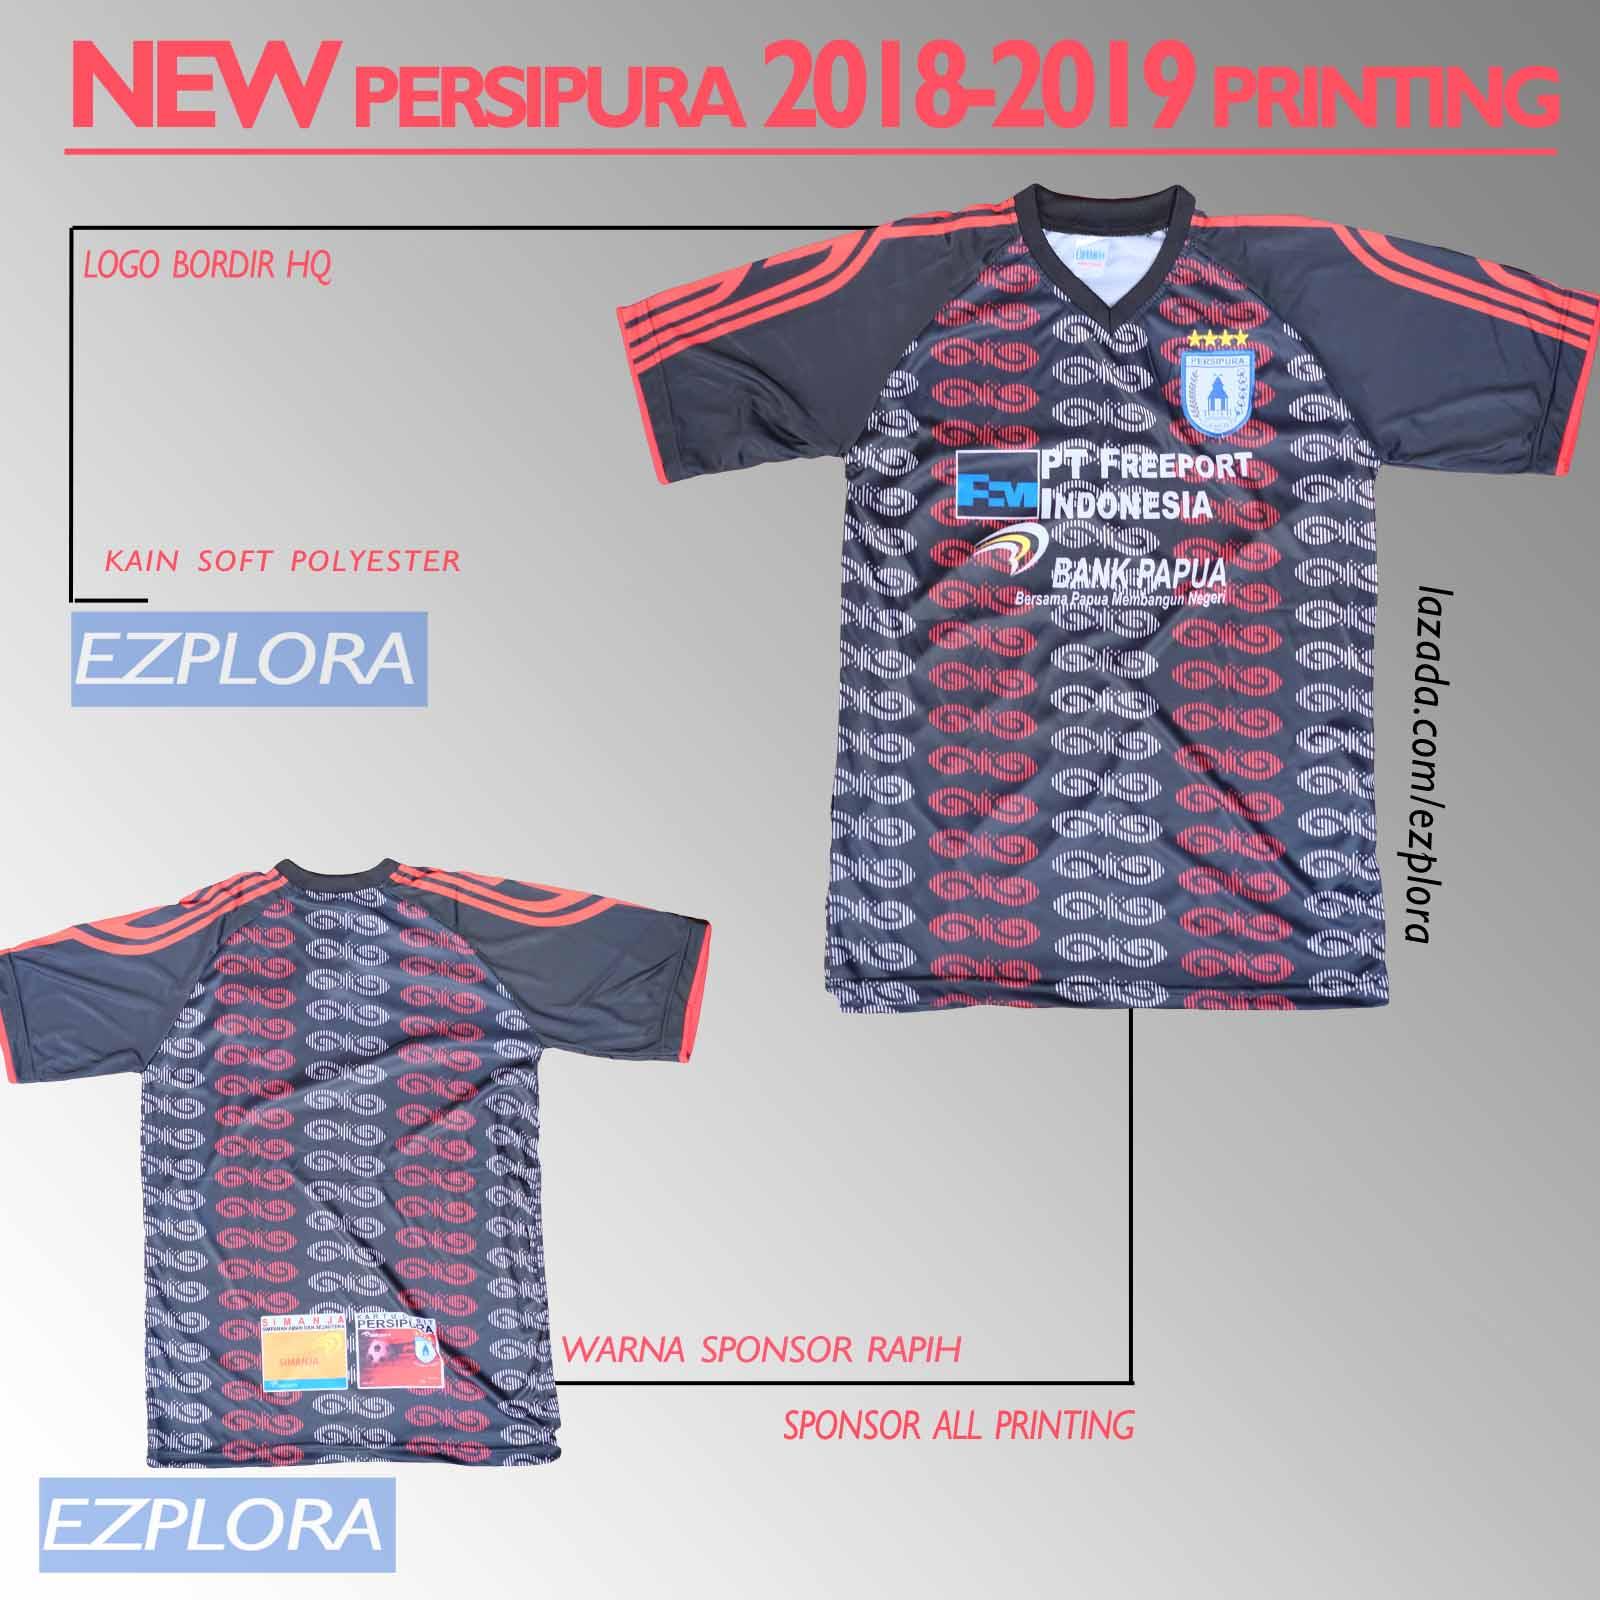 ezplora jersey PERSIPURA JAYAPURA printing 2018-2019 liga satu supporter version